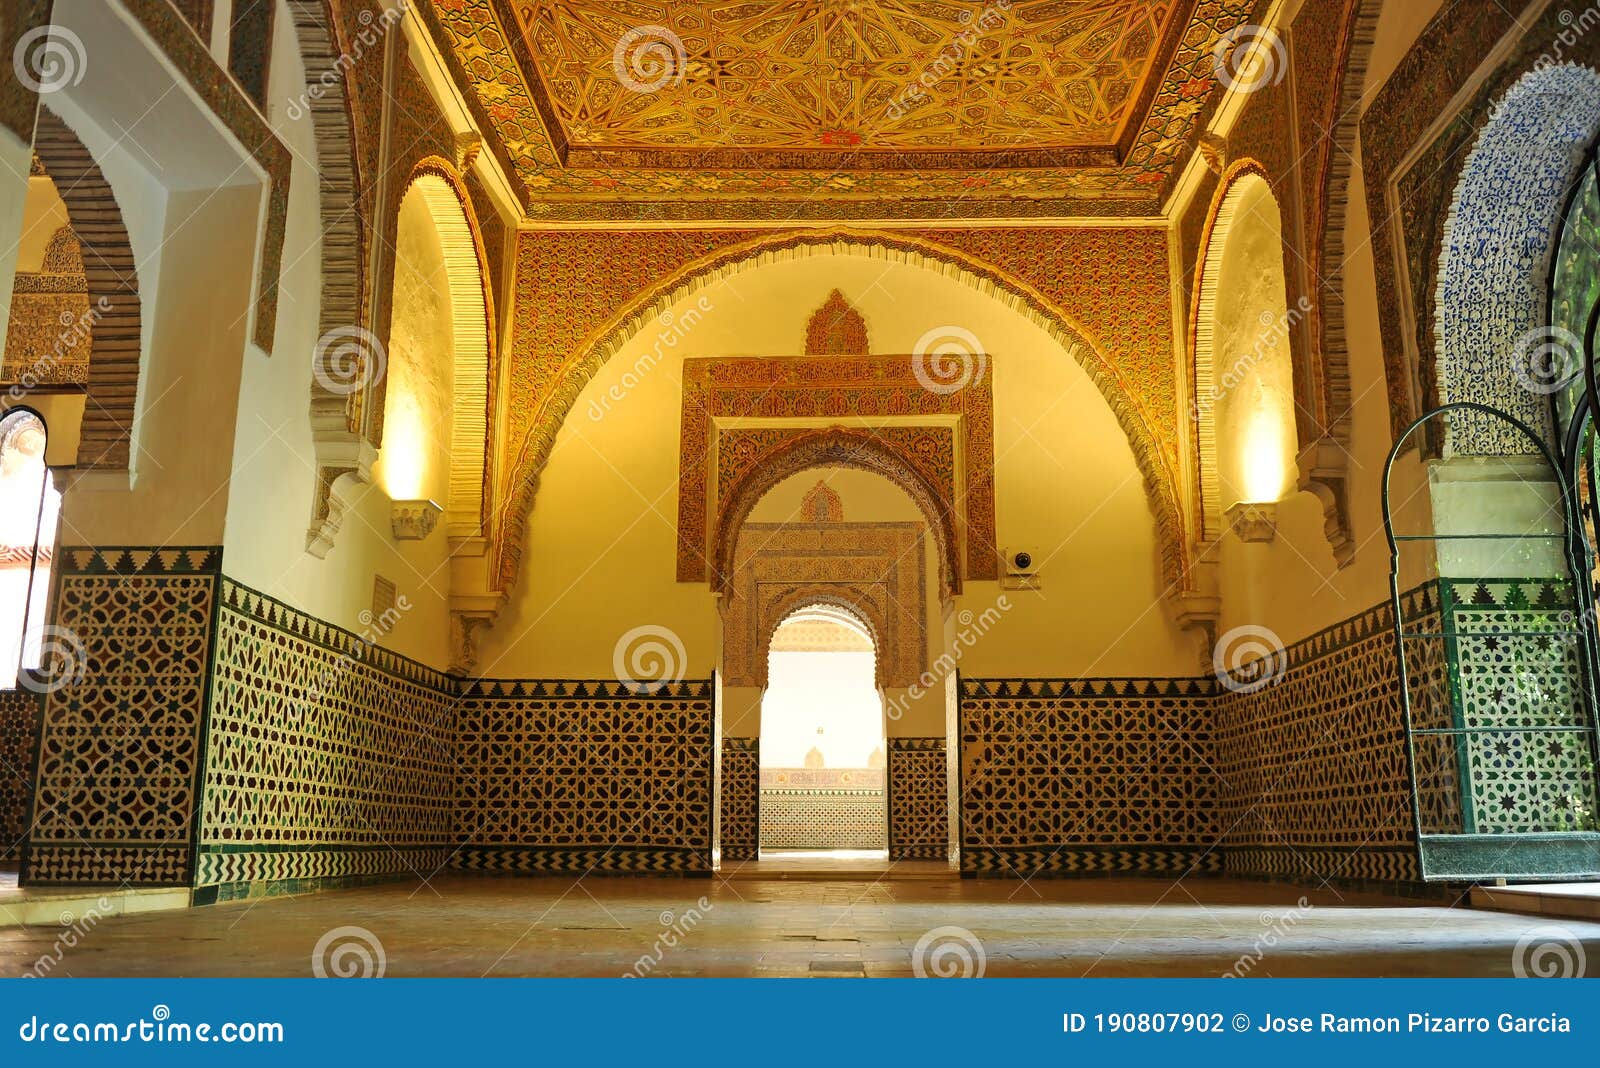 alcazar palace of seville. al andalus arab pattern decoration